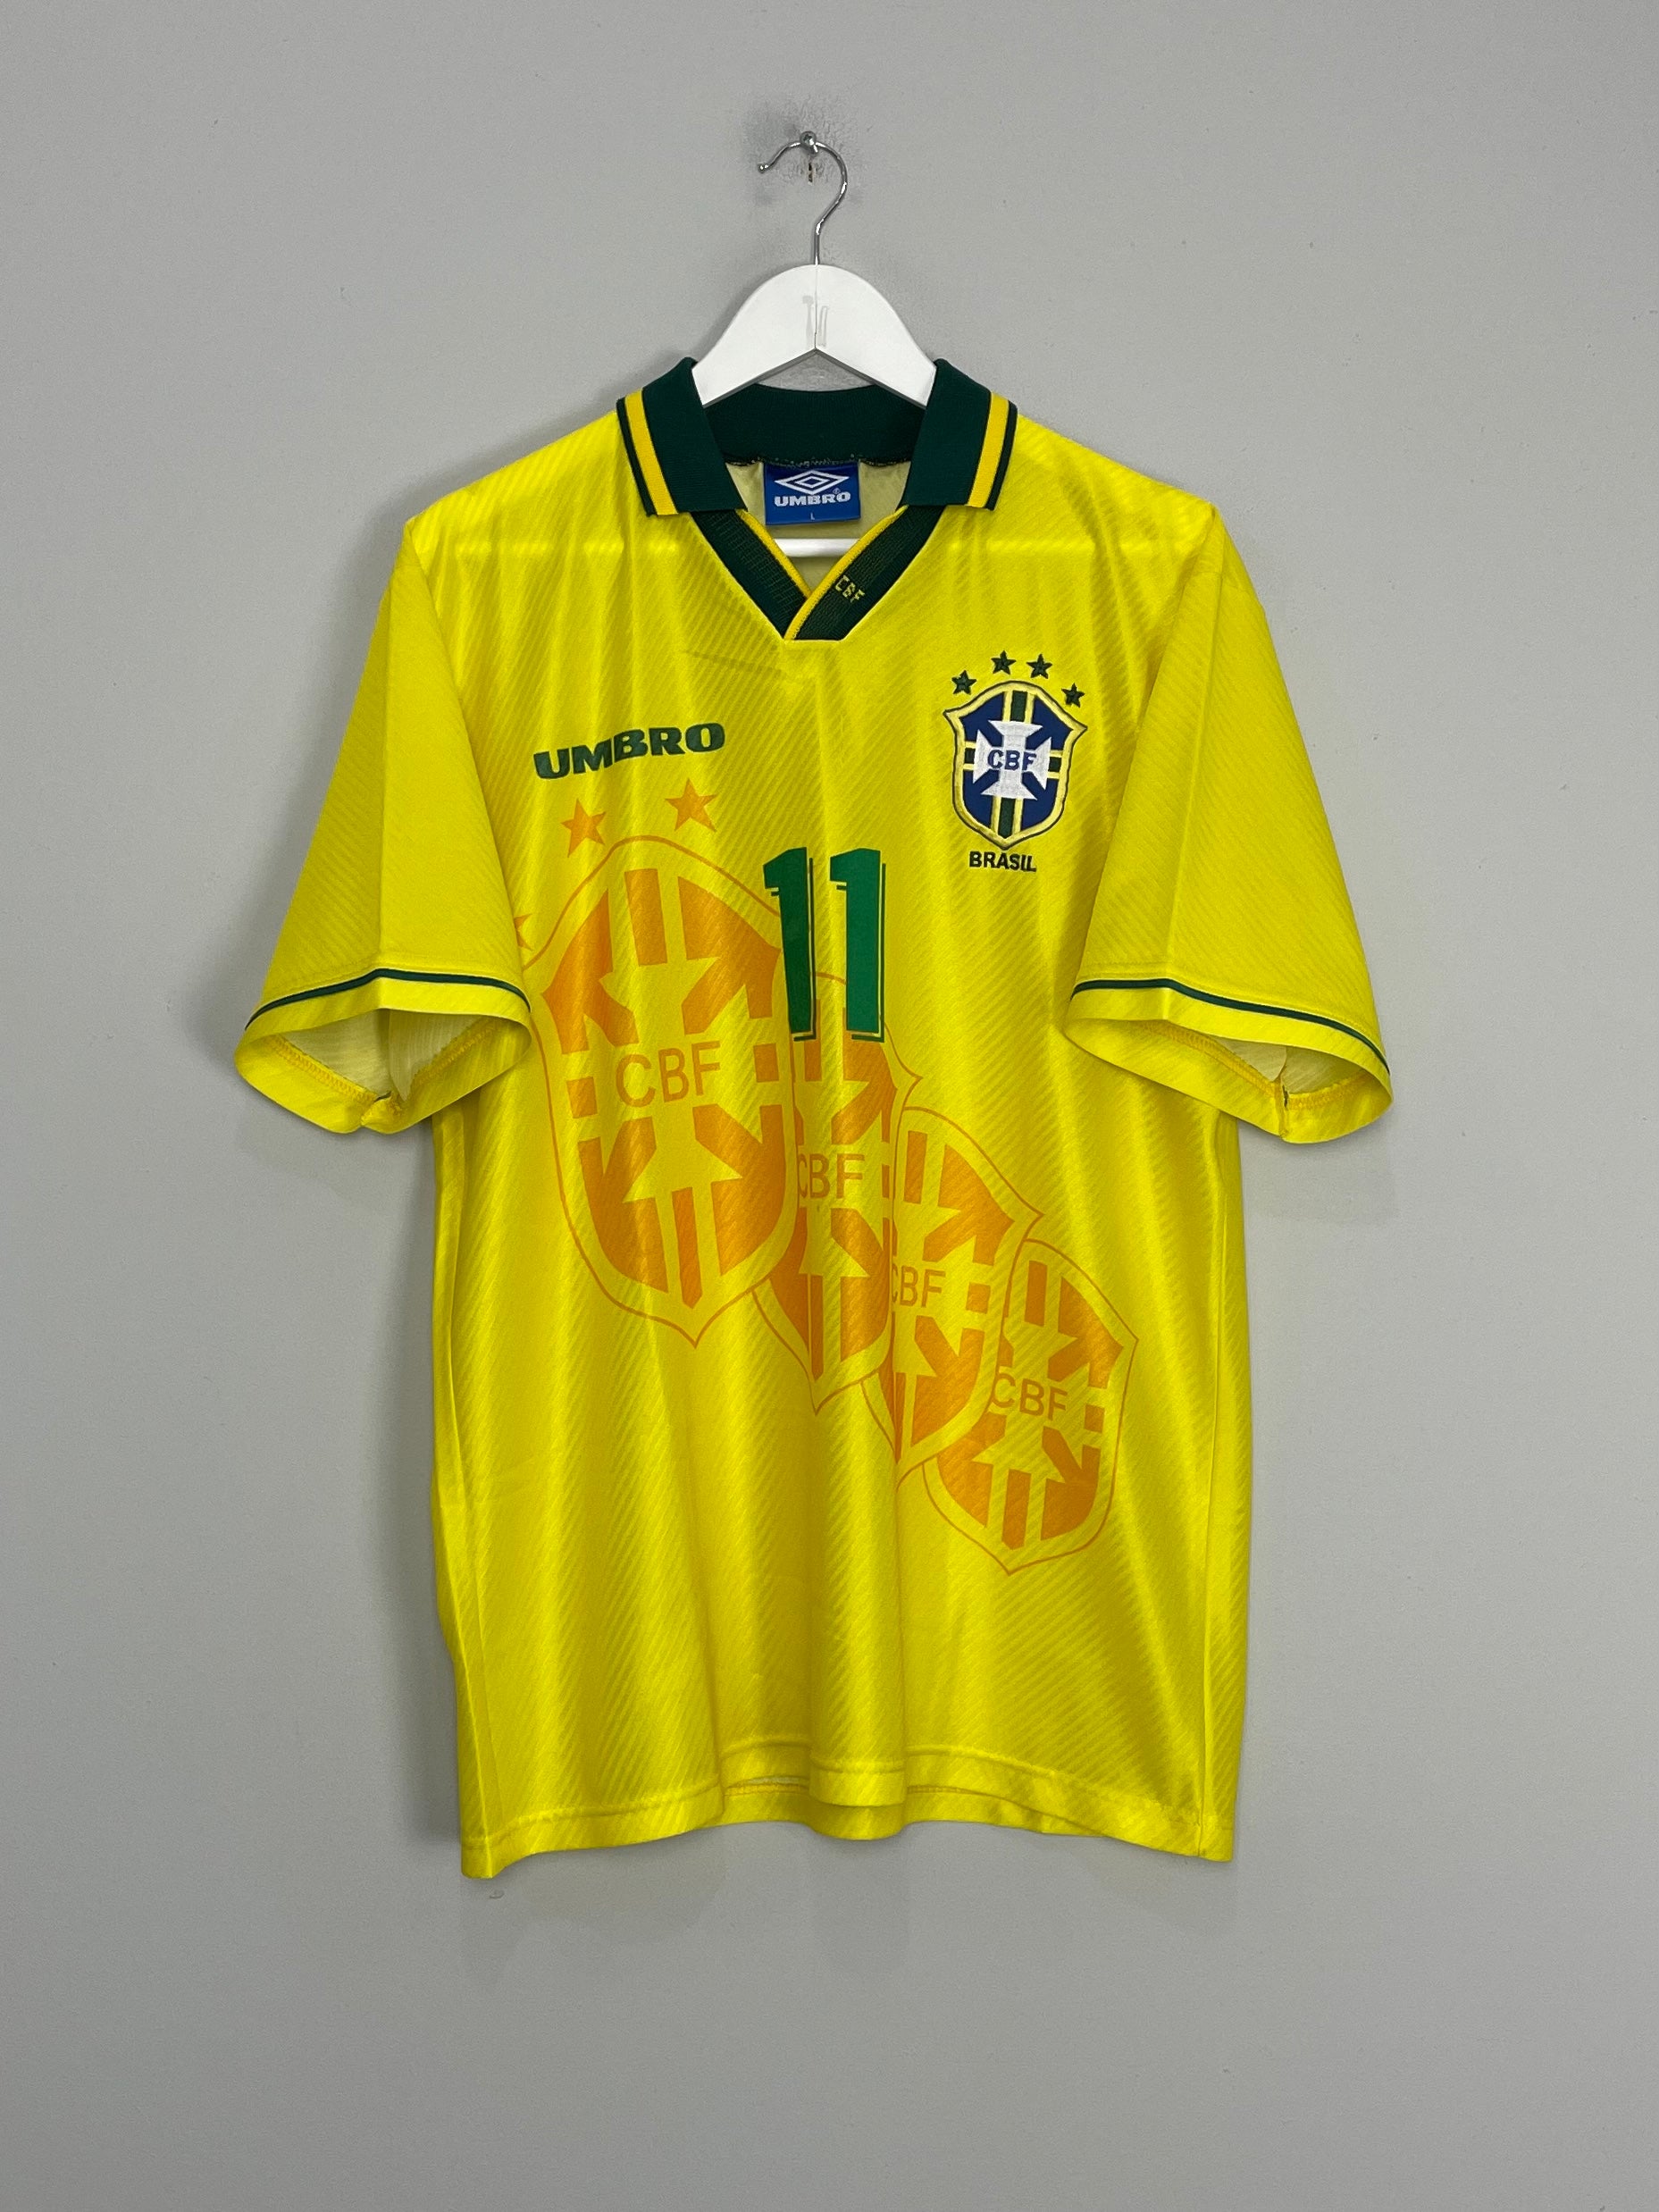 Camisa de futebol Brasil 1994 Romario 11 Home grande /39490